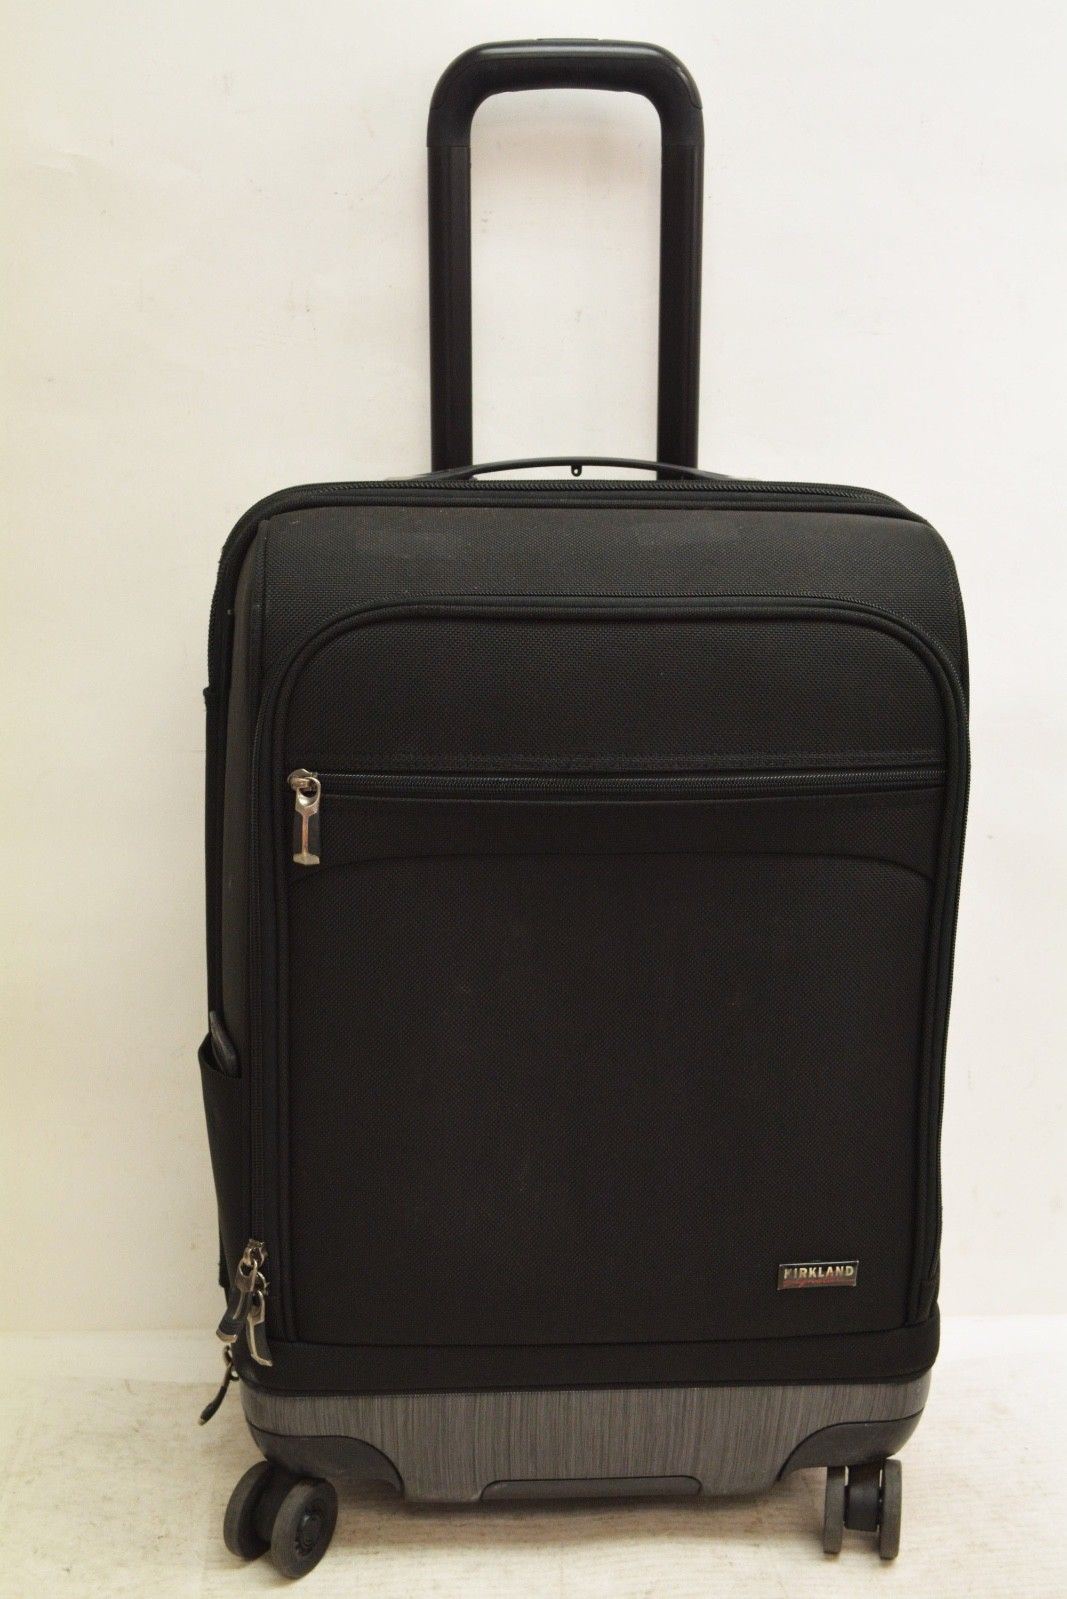 Kirkland SignatureTM Hybrid Spinner 21" CarryOn Luggage Black